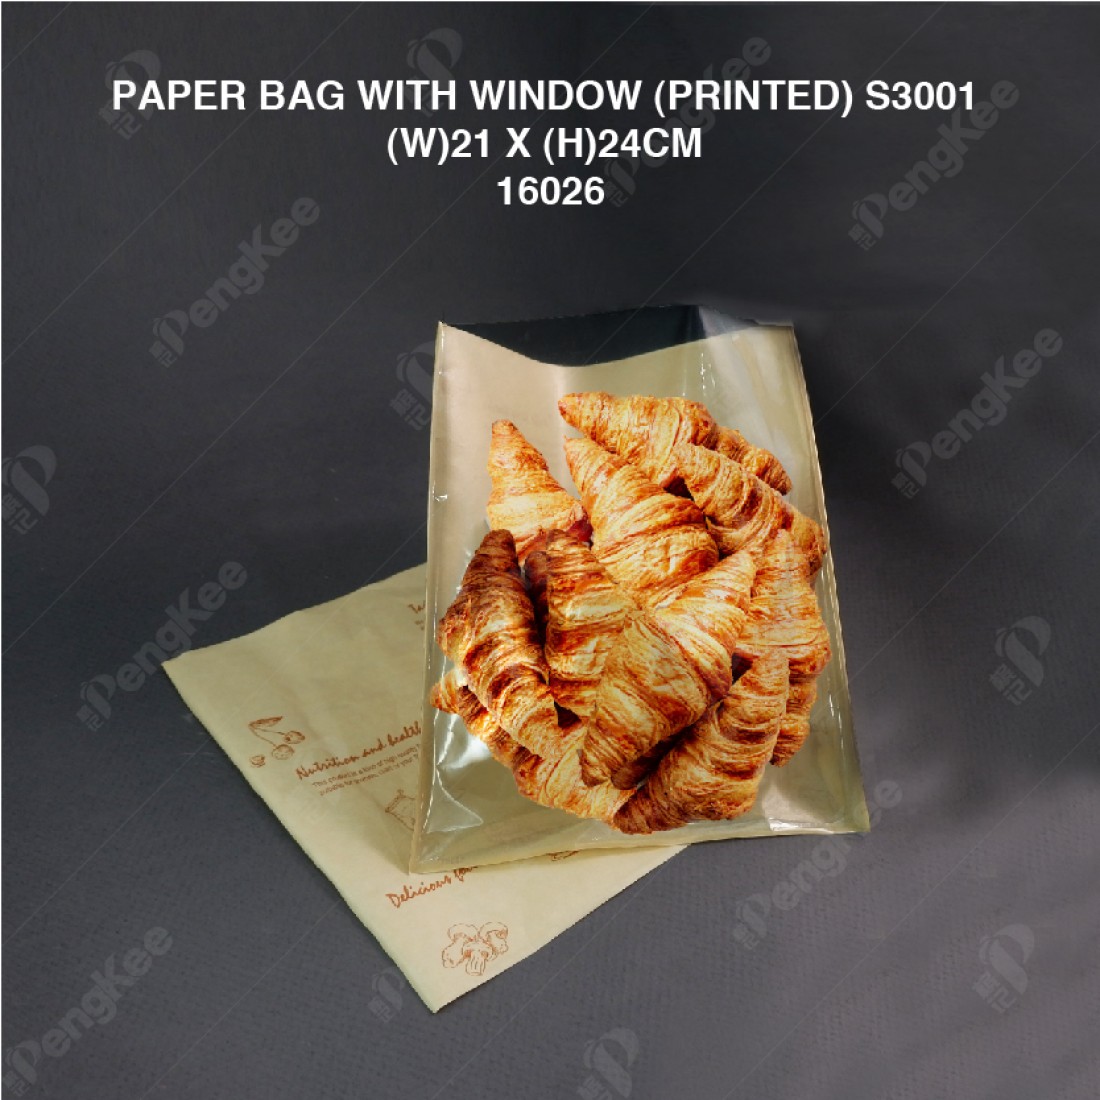 PAPER BAG WITH WINDOW (PRINTED) S3001 (W)21 X (H)24CM (100'SPKT) (36PKTCTN) 